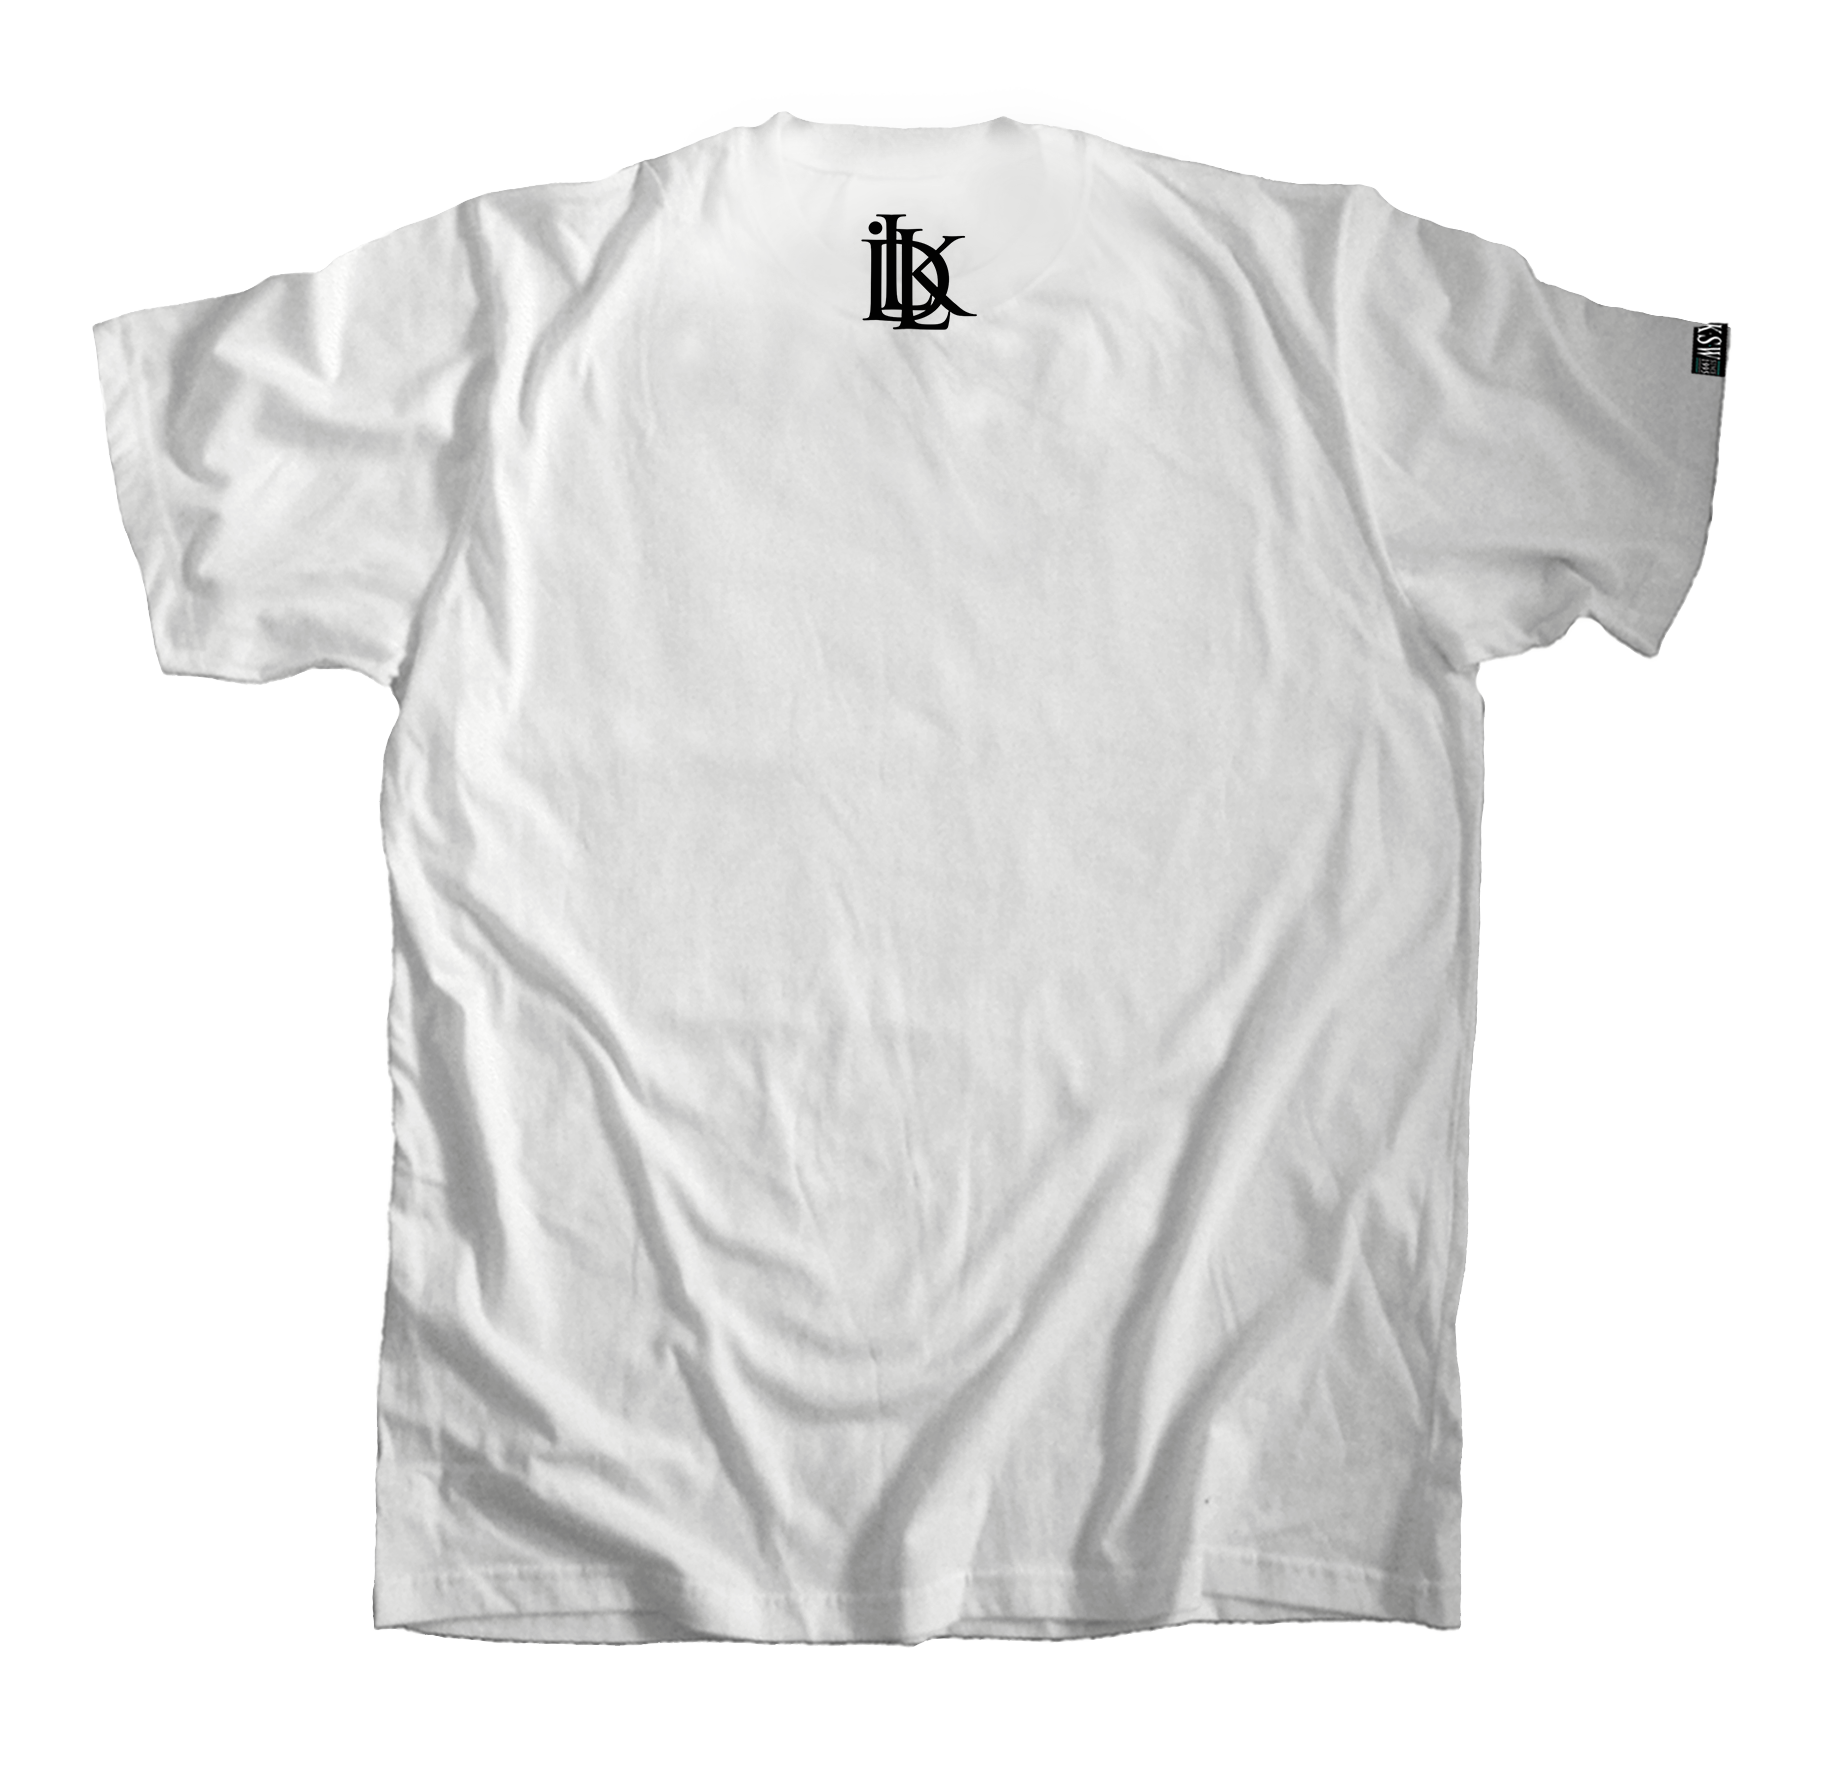 IKSW Handstyle - White T-Shirt - ILLKids StreetWear